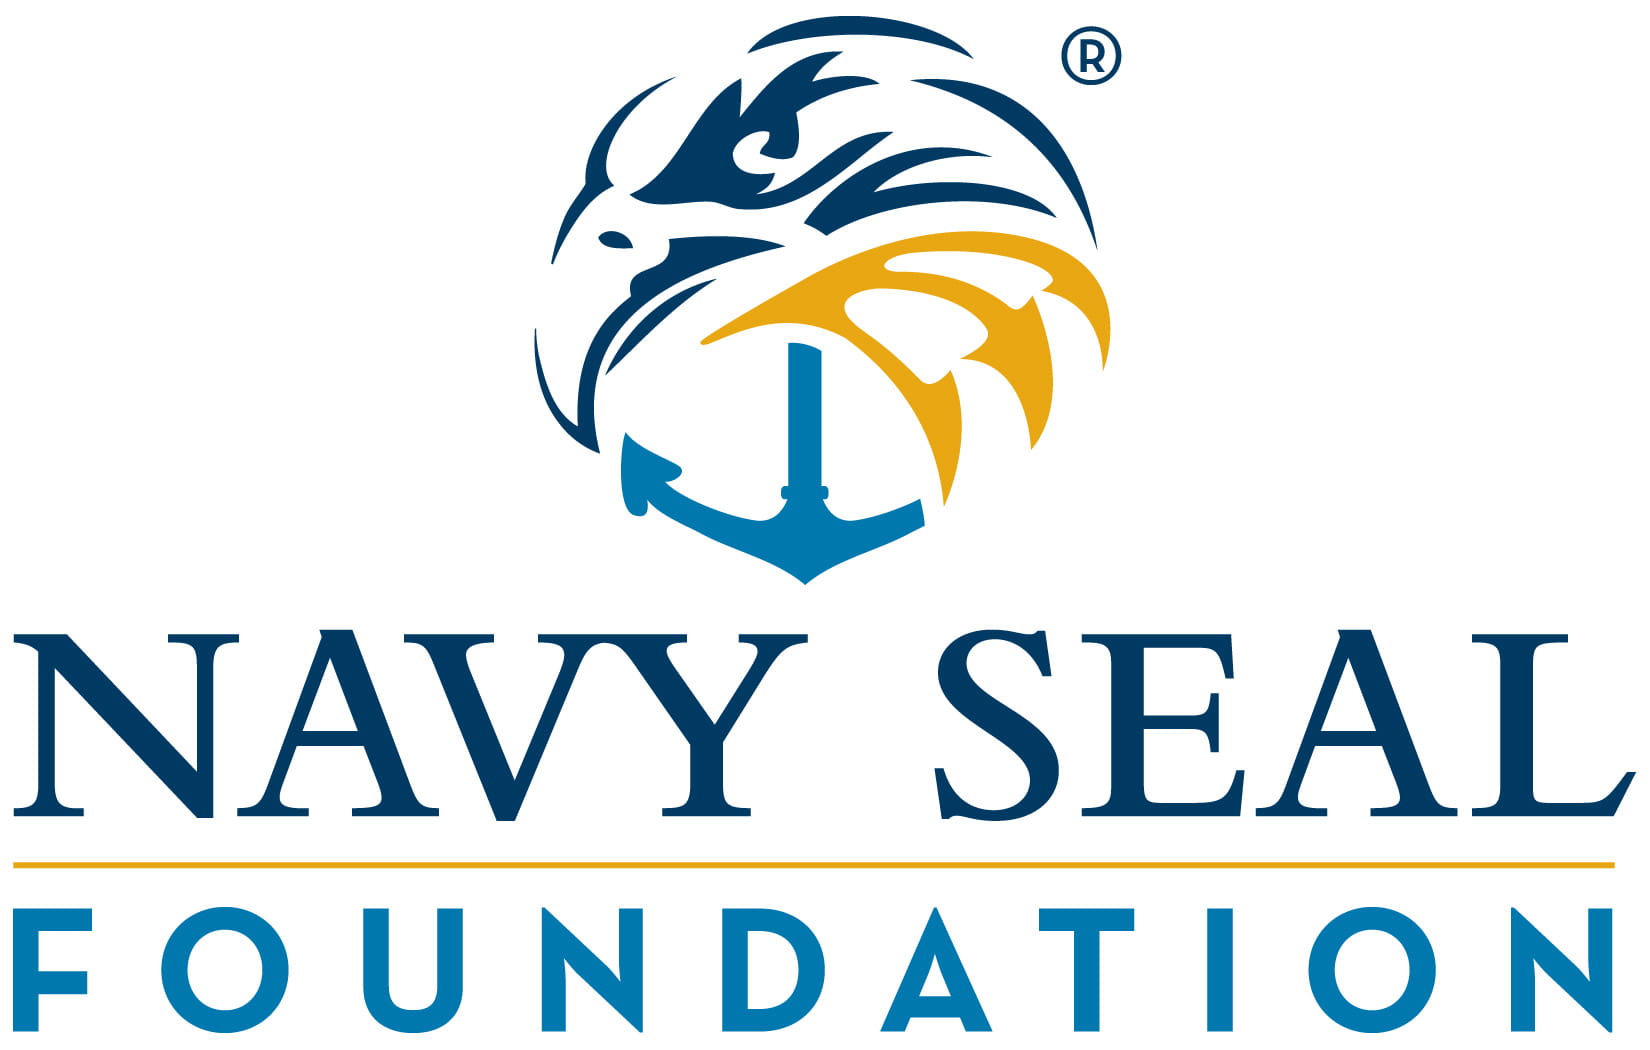 Navy Seal foundation logo